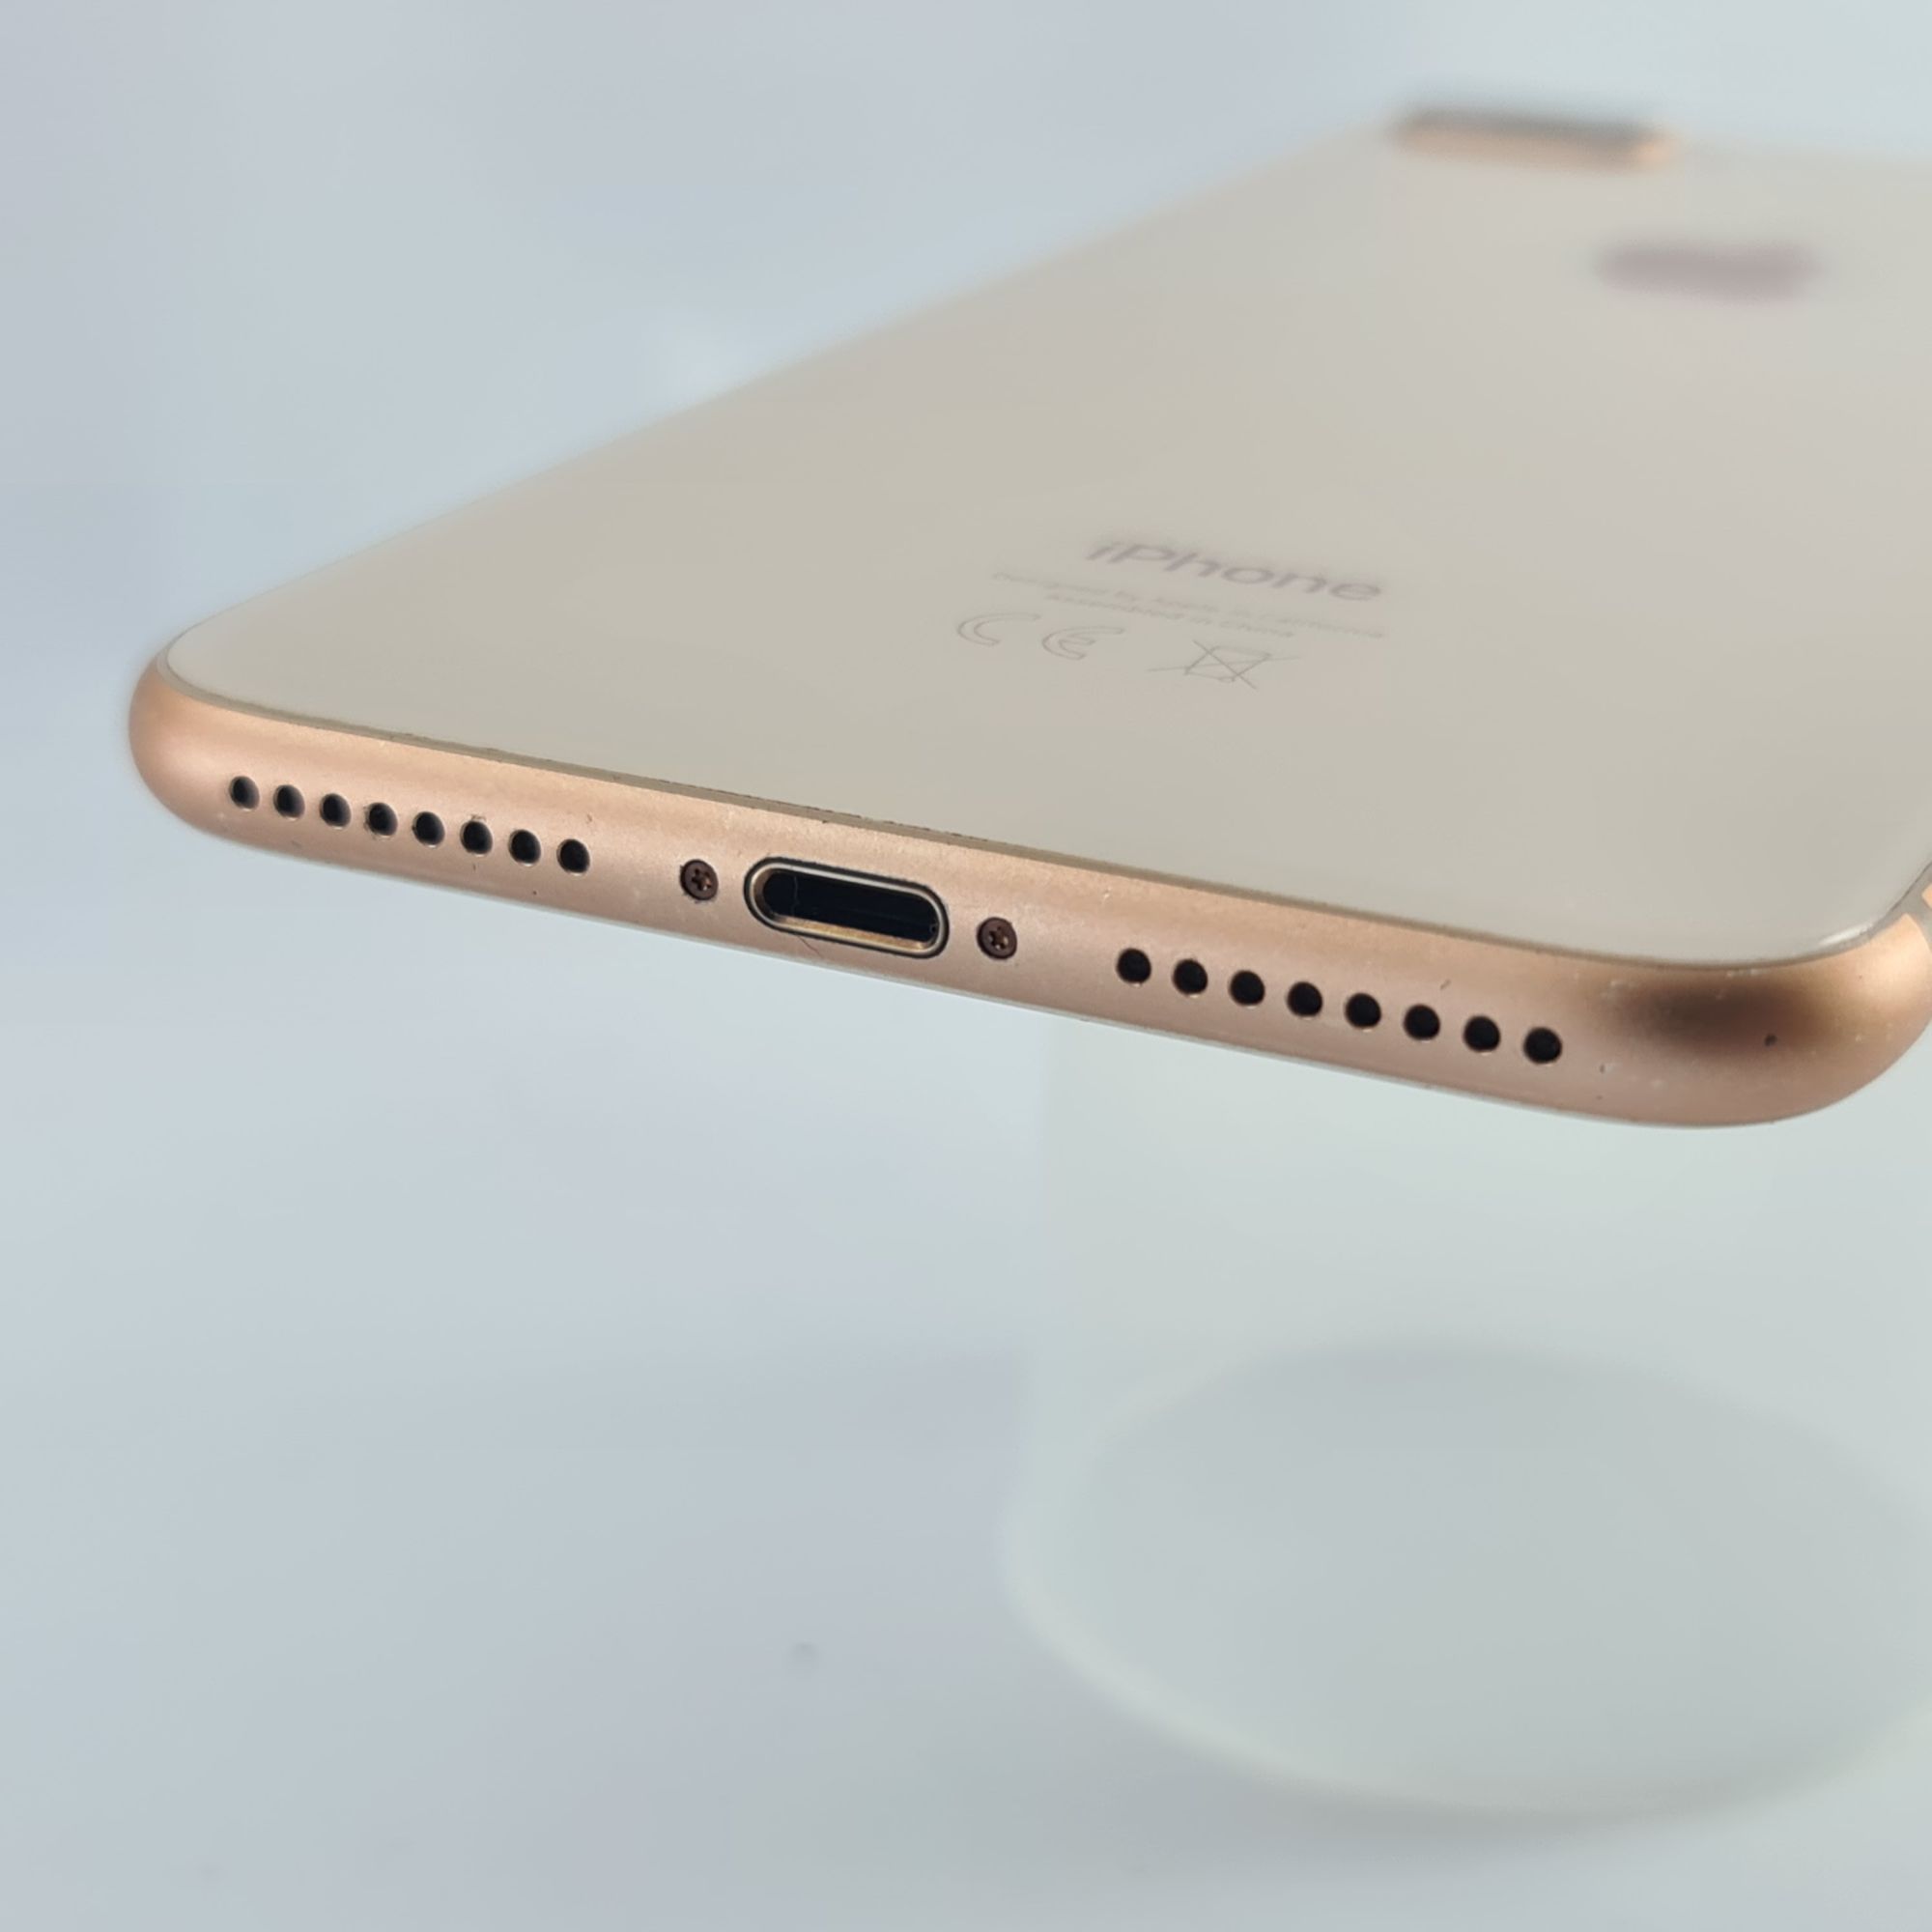 Apple iPhone 8 Plus 64Gb Gold (MQ8N2) 7